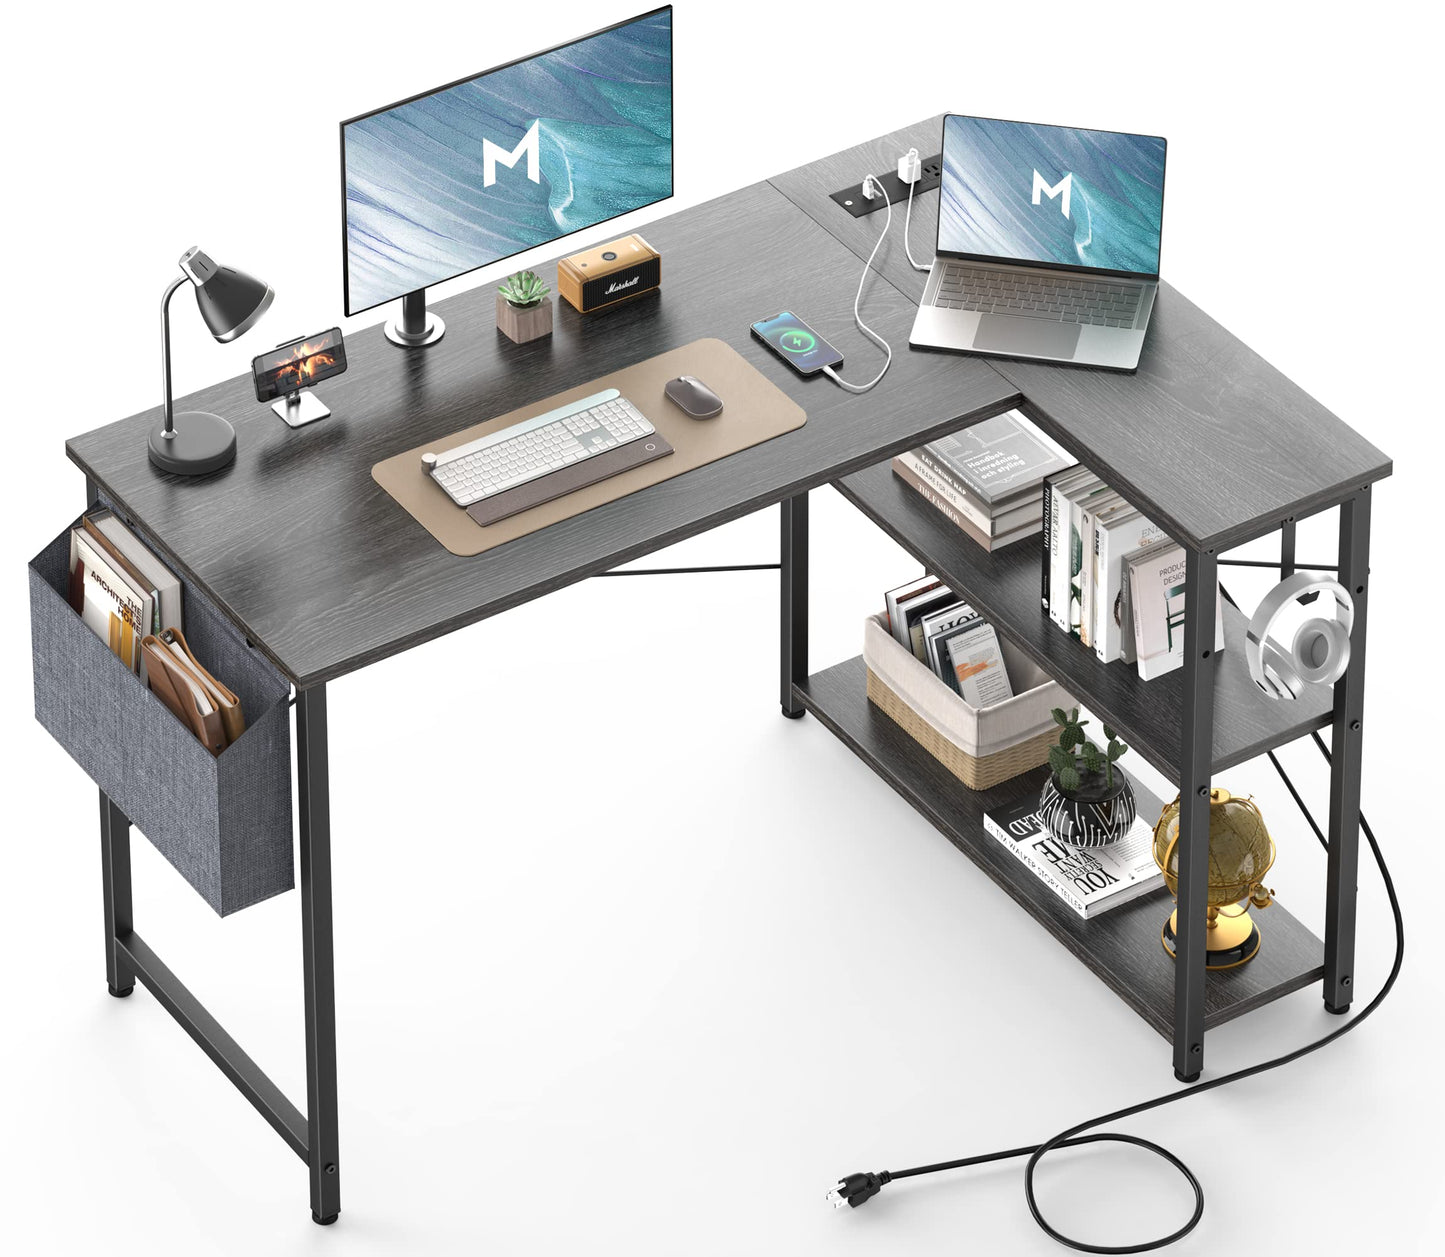 Mr IRONSTONE L Shaped Desk with Outlets & USB Ports, Reversible 47 Inch Office Desk, Corner Desk for Small Space, Home Office Desk with Storage Bag & Hook, Black Oak